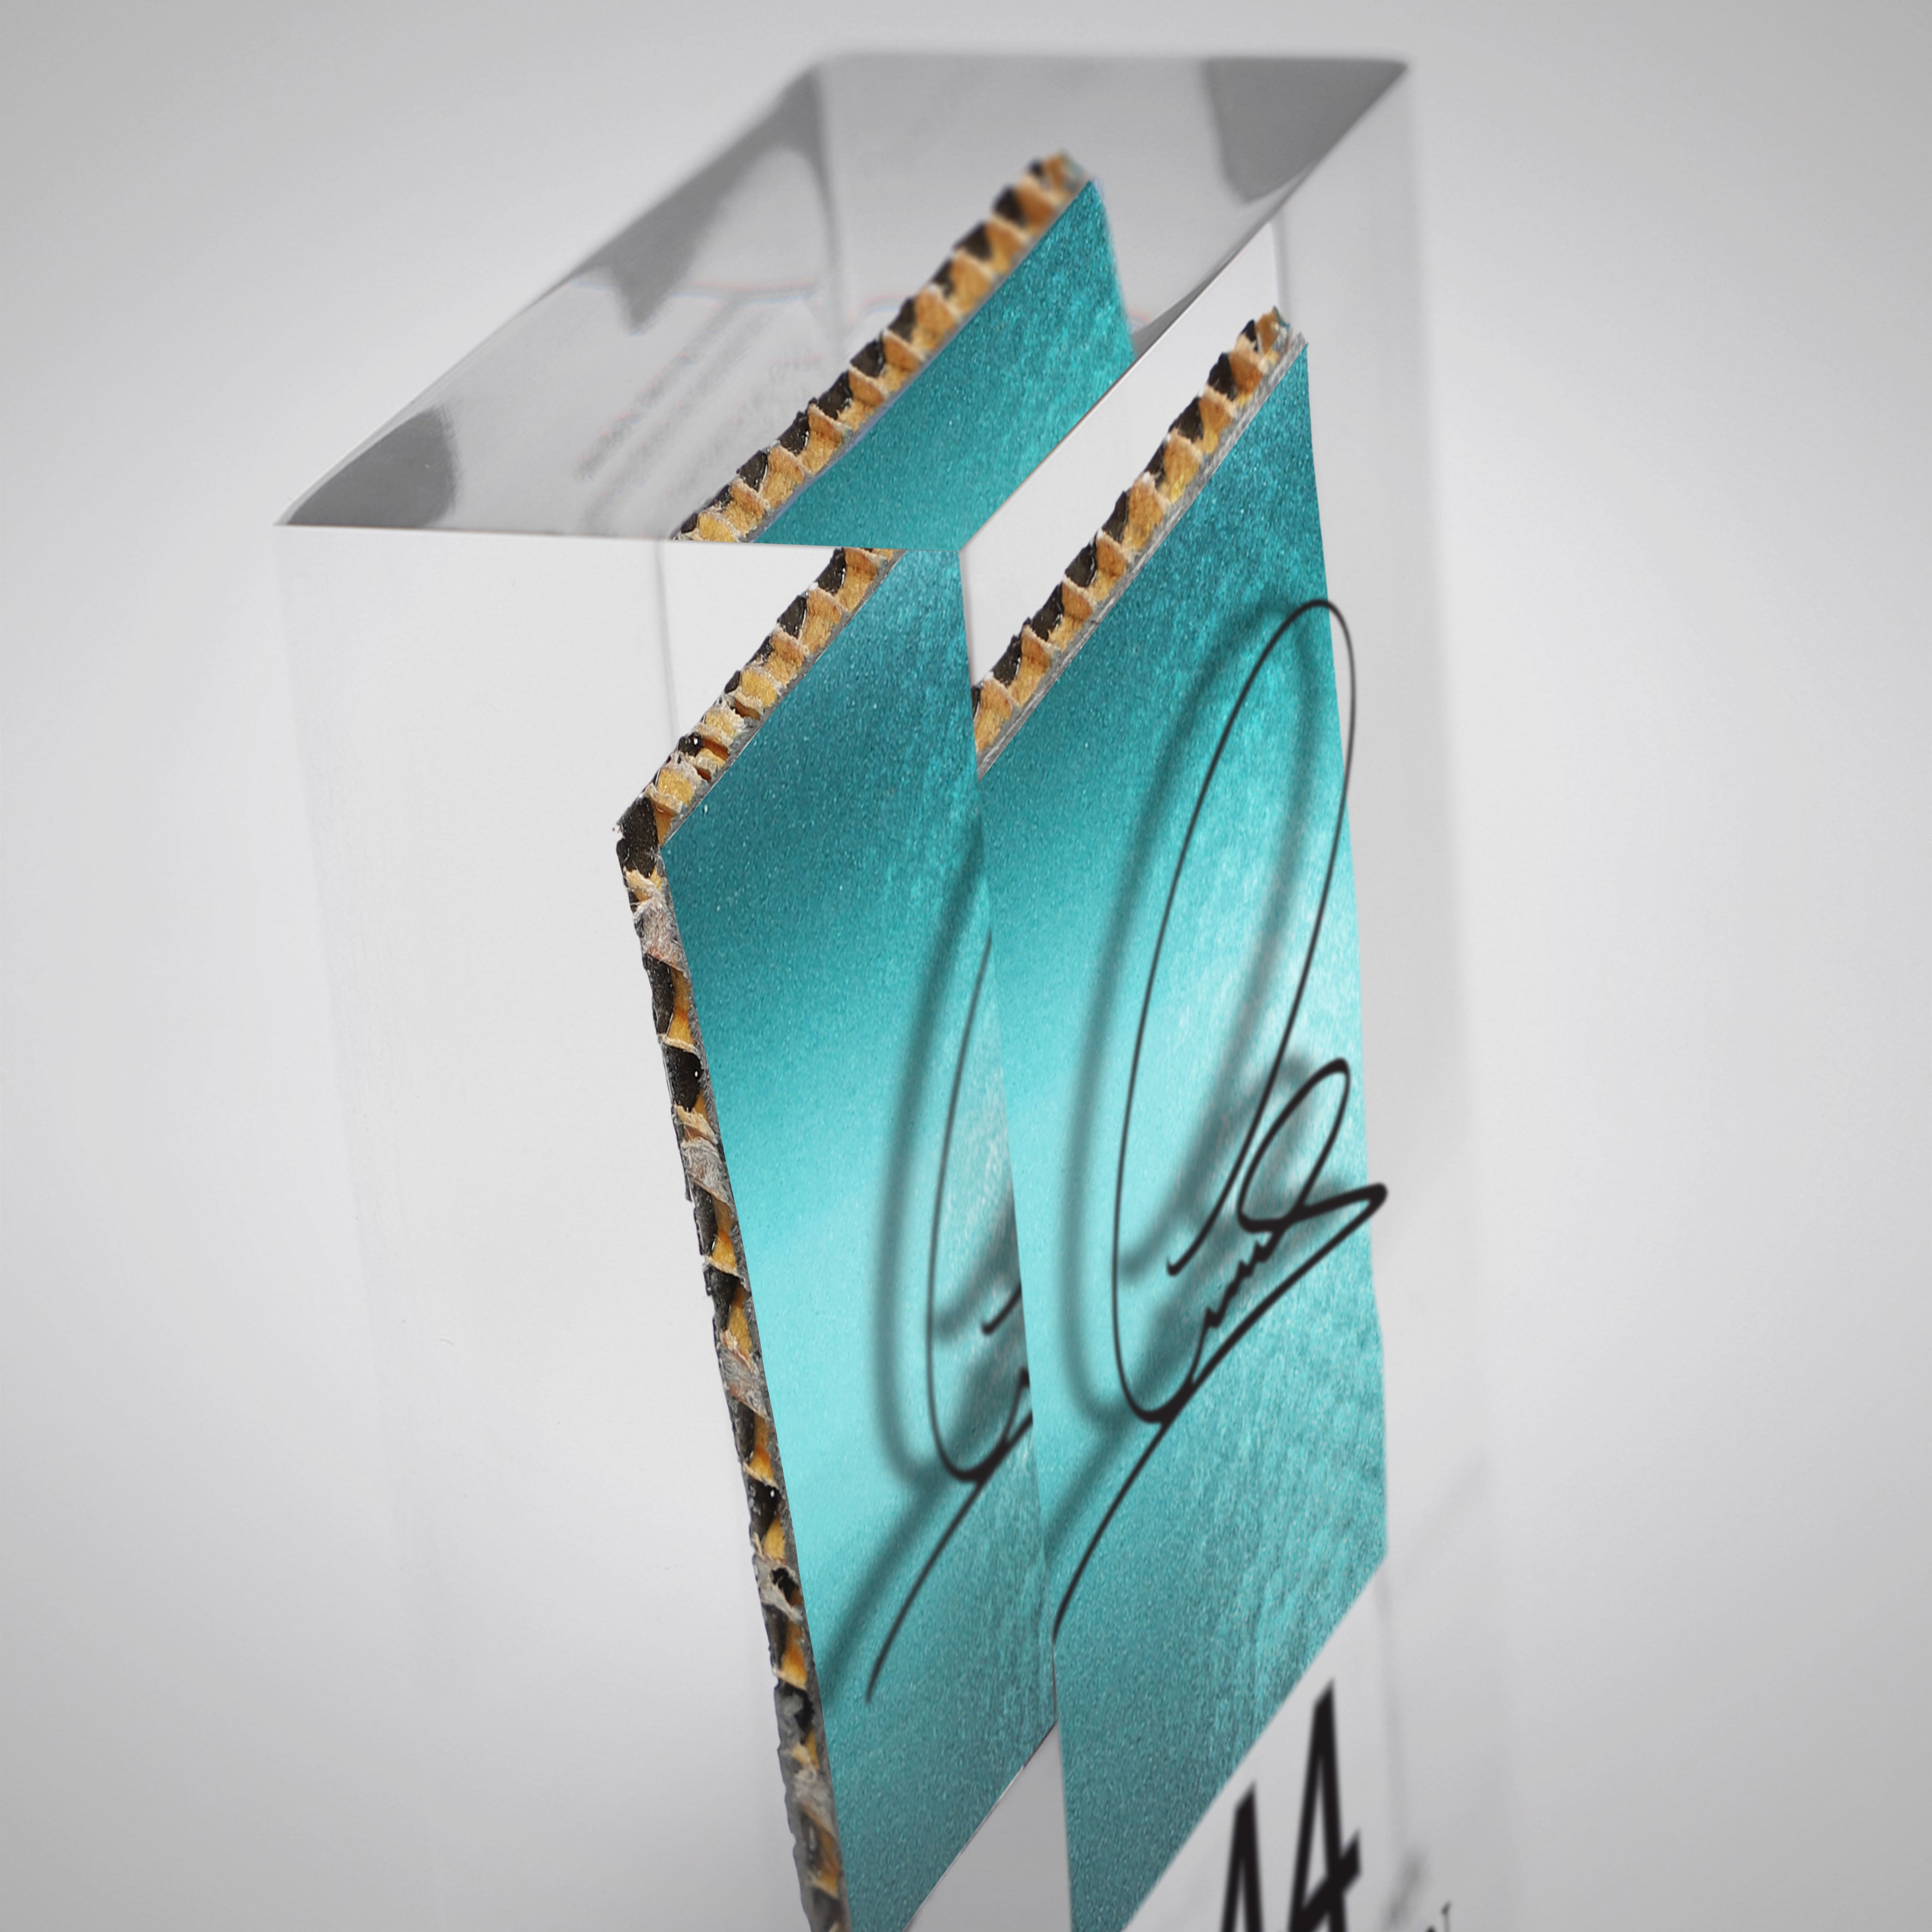 Lewis Hamilton 2014 Bodywork & Acrylic